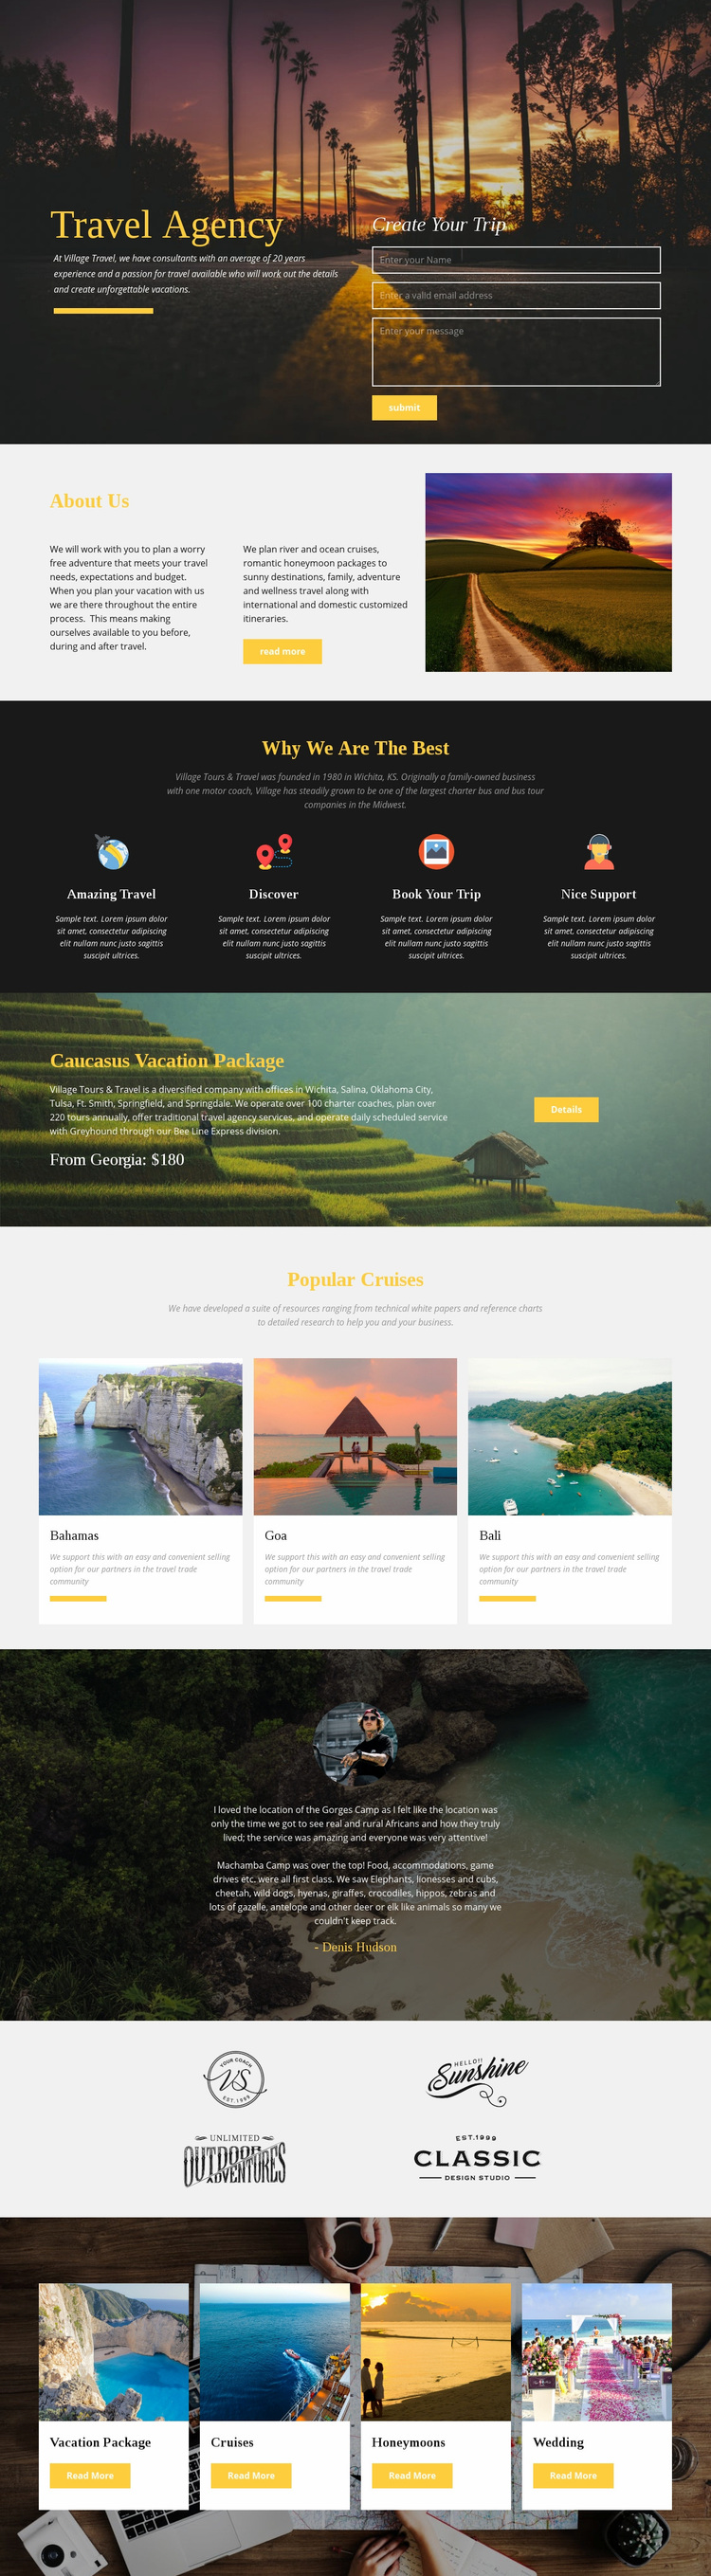 African safari tour company Web Page Designer